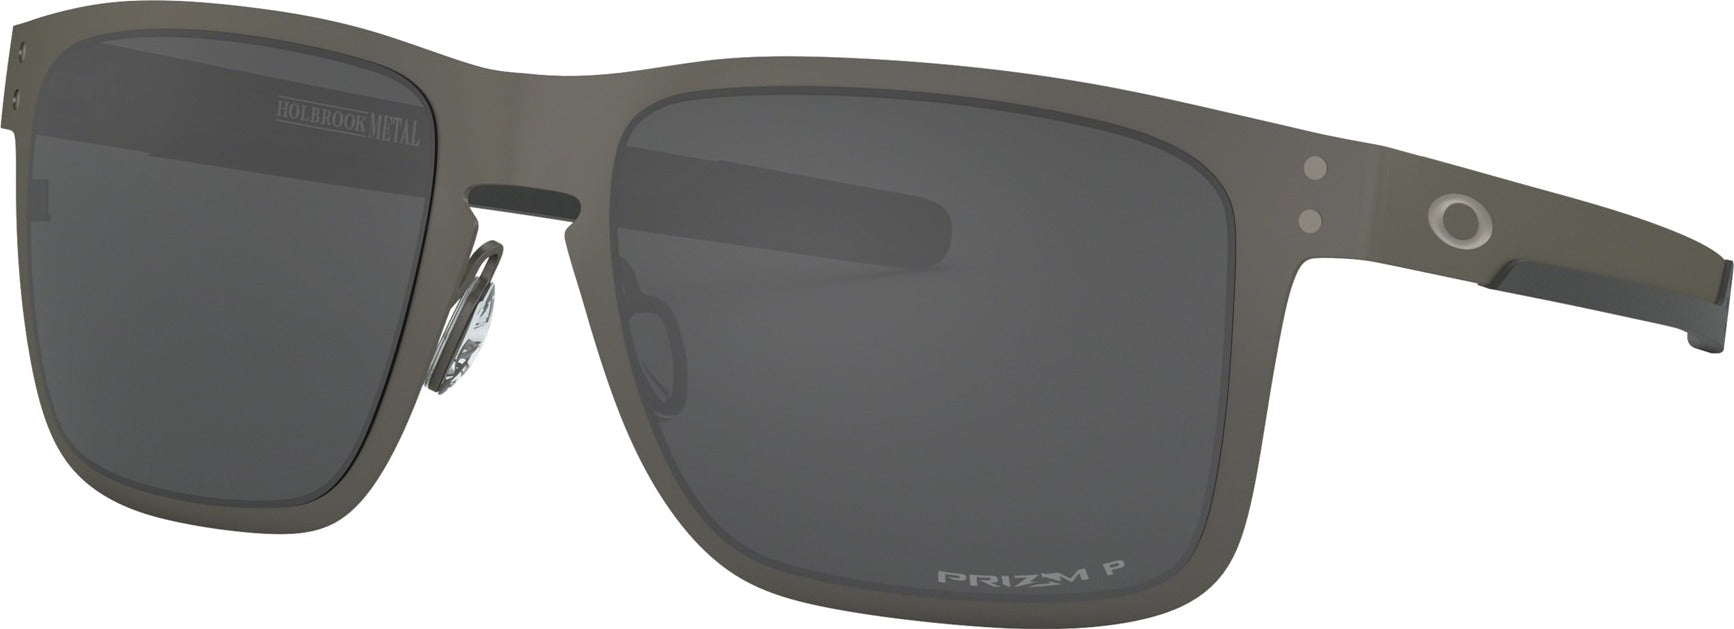 Oakley Holbrook Metal Sunglasses - Matte Gunmetal - Prizm Black Polarized  Lens | Altitude Sports